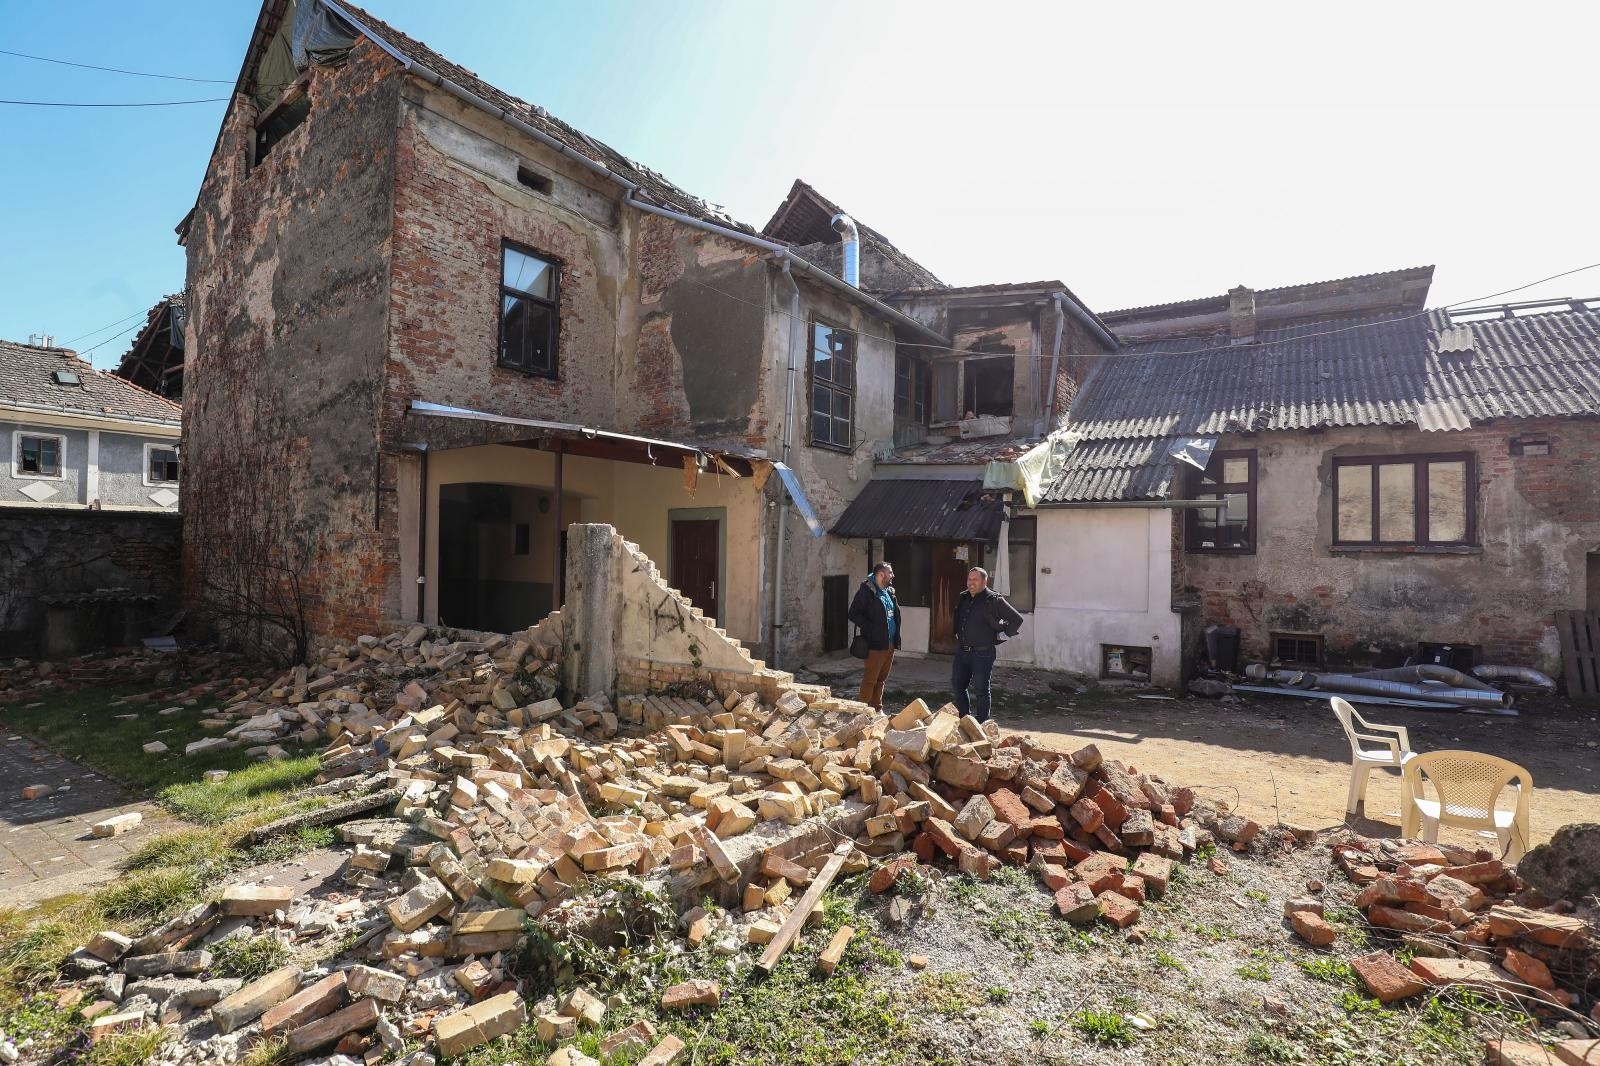 02.03.2021, Petrinja - Zivot u Petrinji dva mjeseca nakon potresa.
Photo: Jurica Galoic/PIXSELL